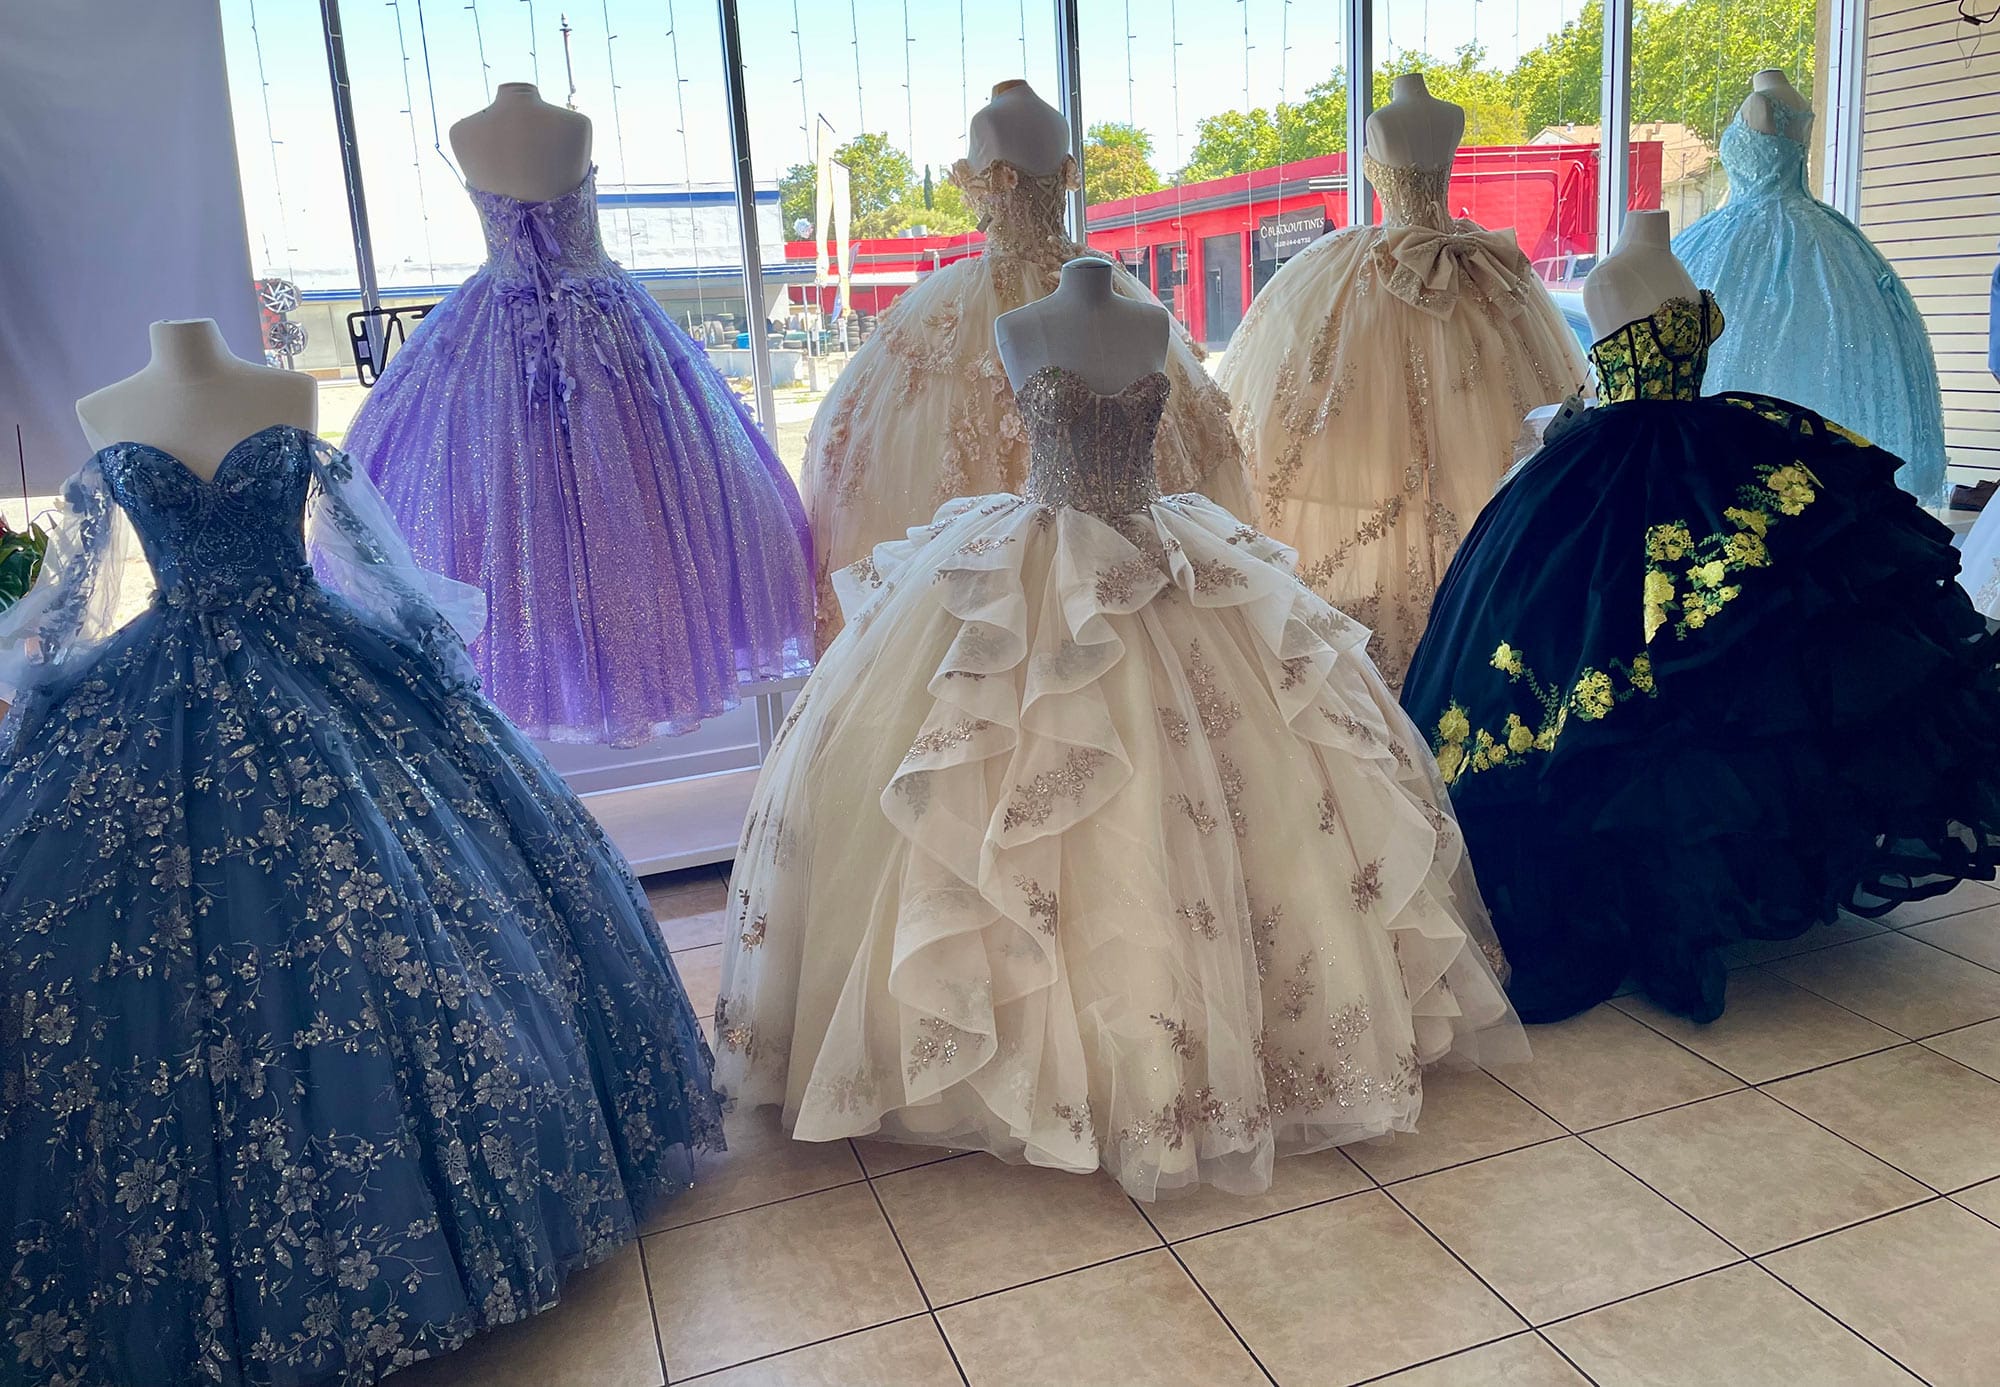 Quinceañera dresses for sale in Bele's Bridal. 